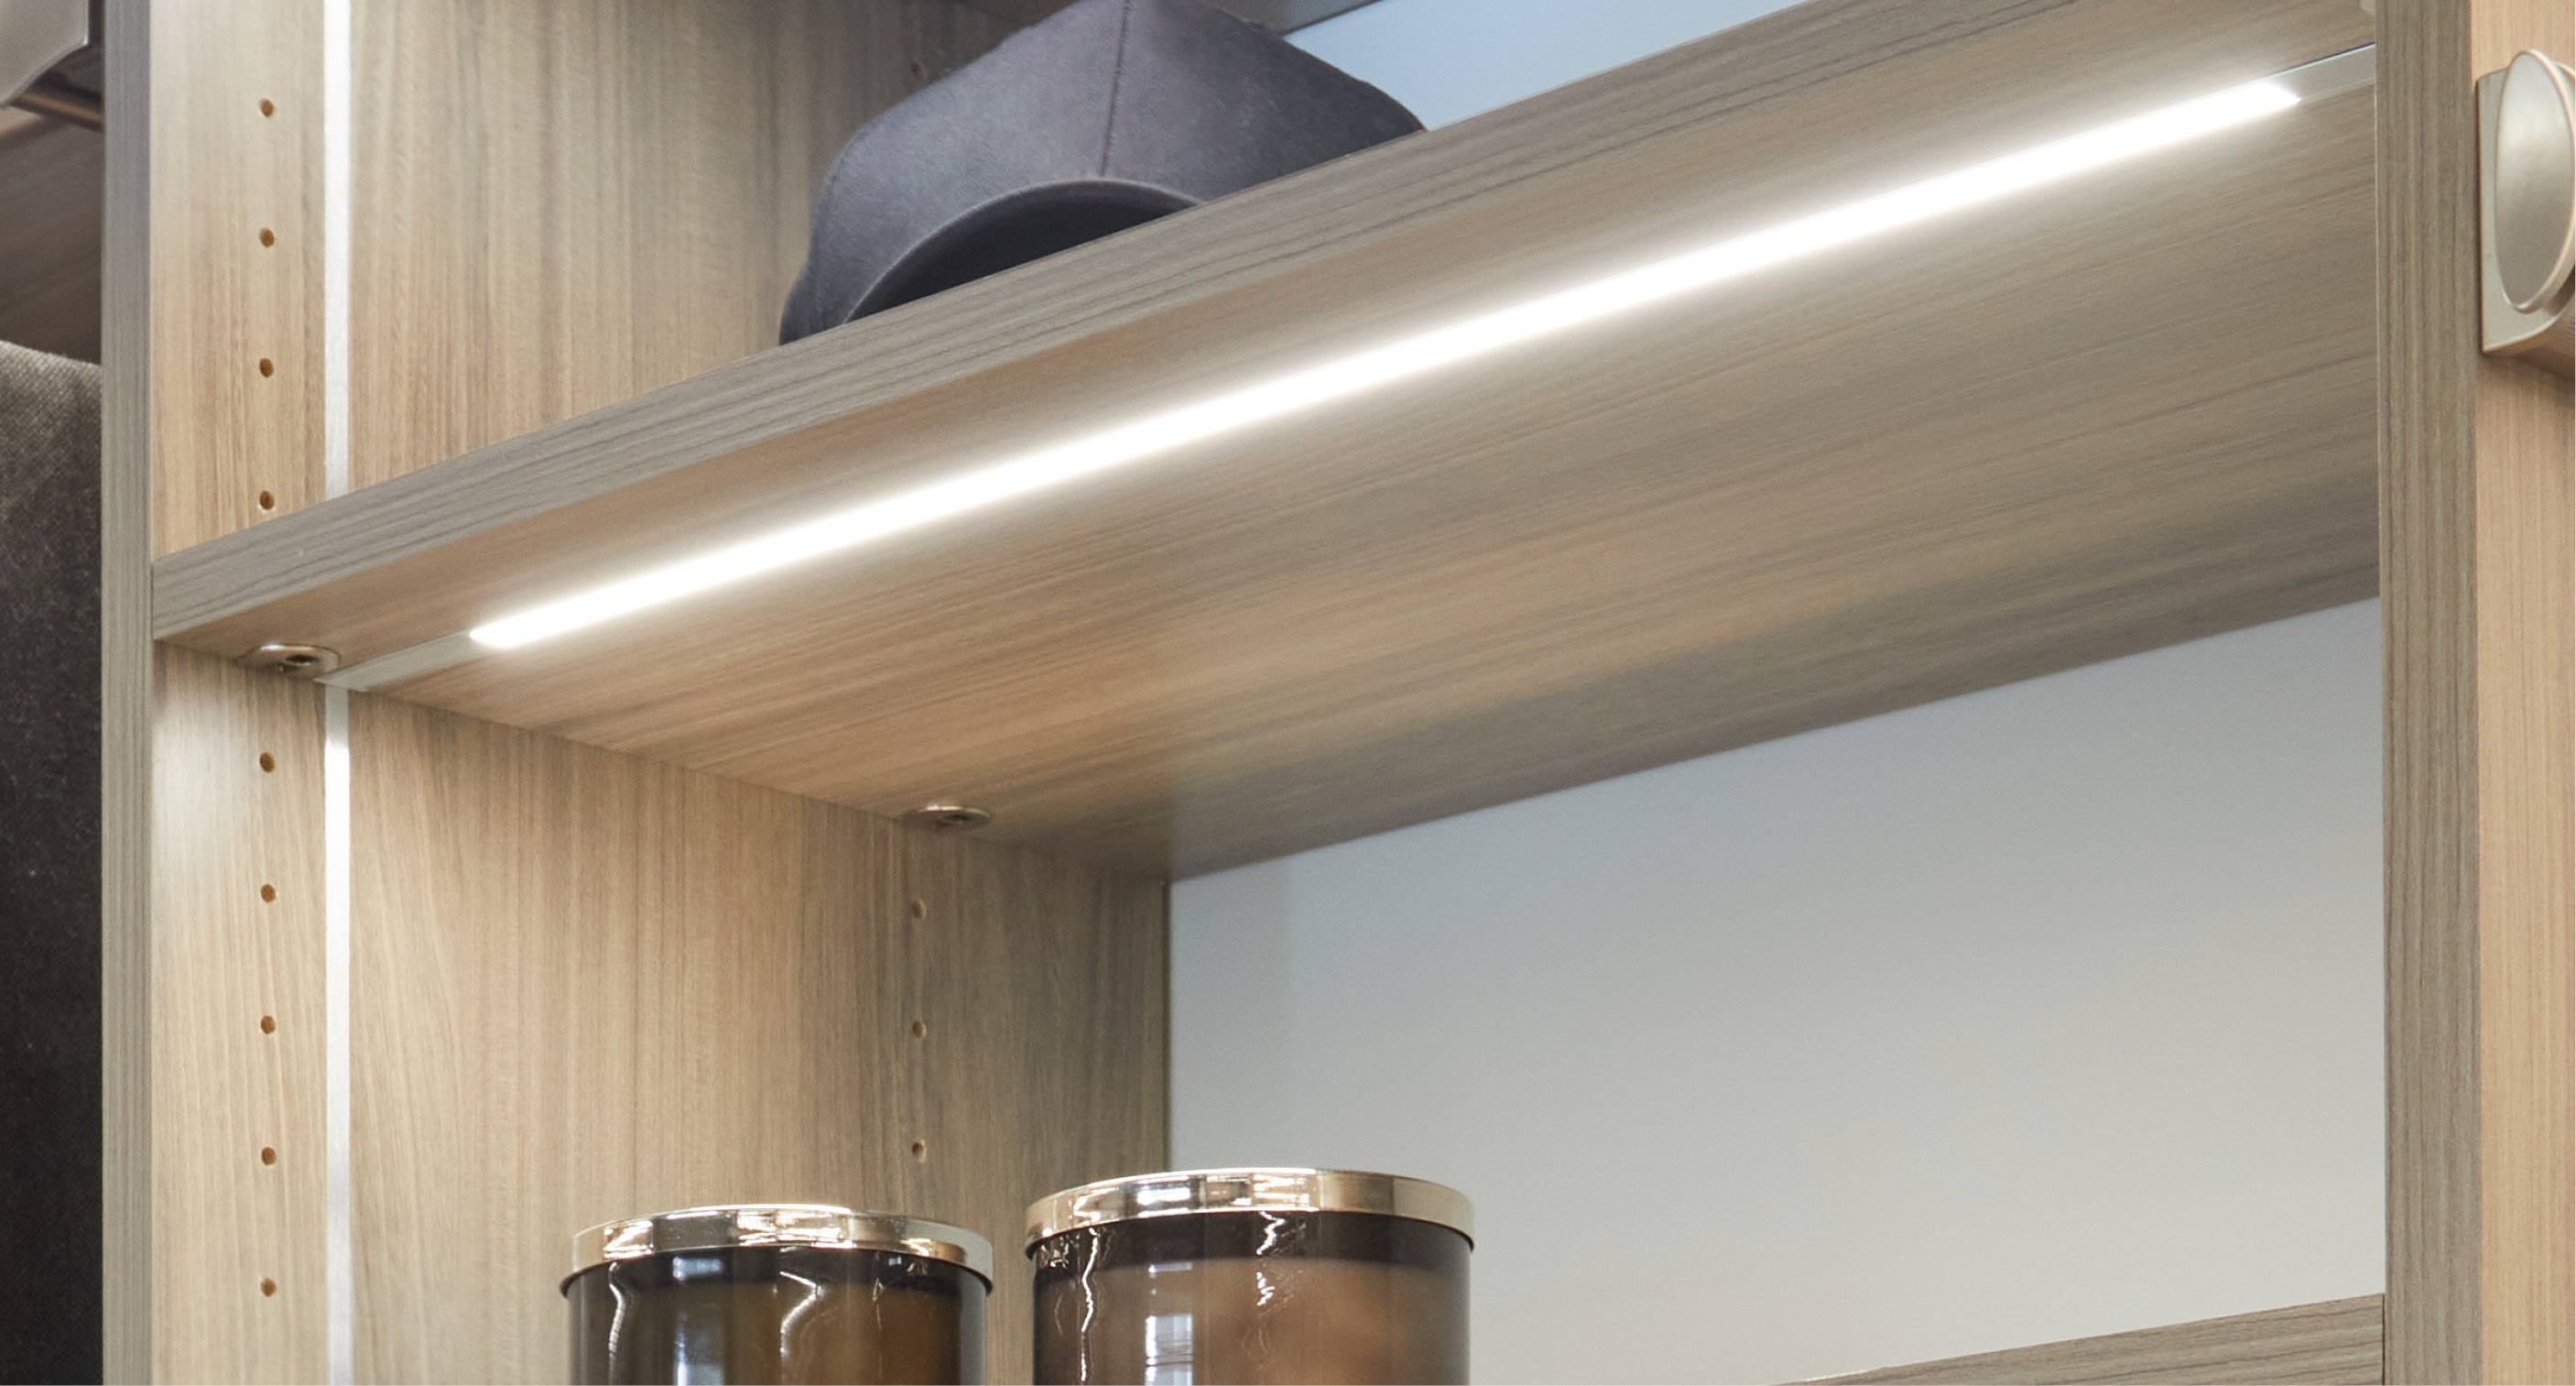 Watch the Wireless Adjustable Shelf Light System video from Häfele.